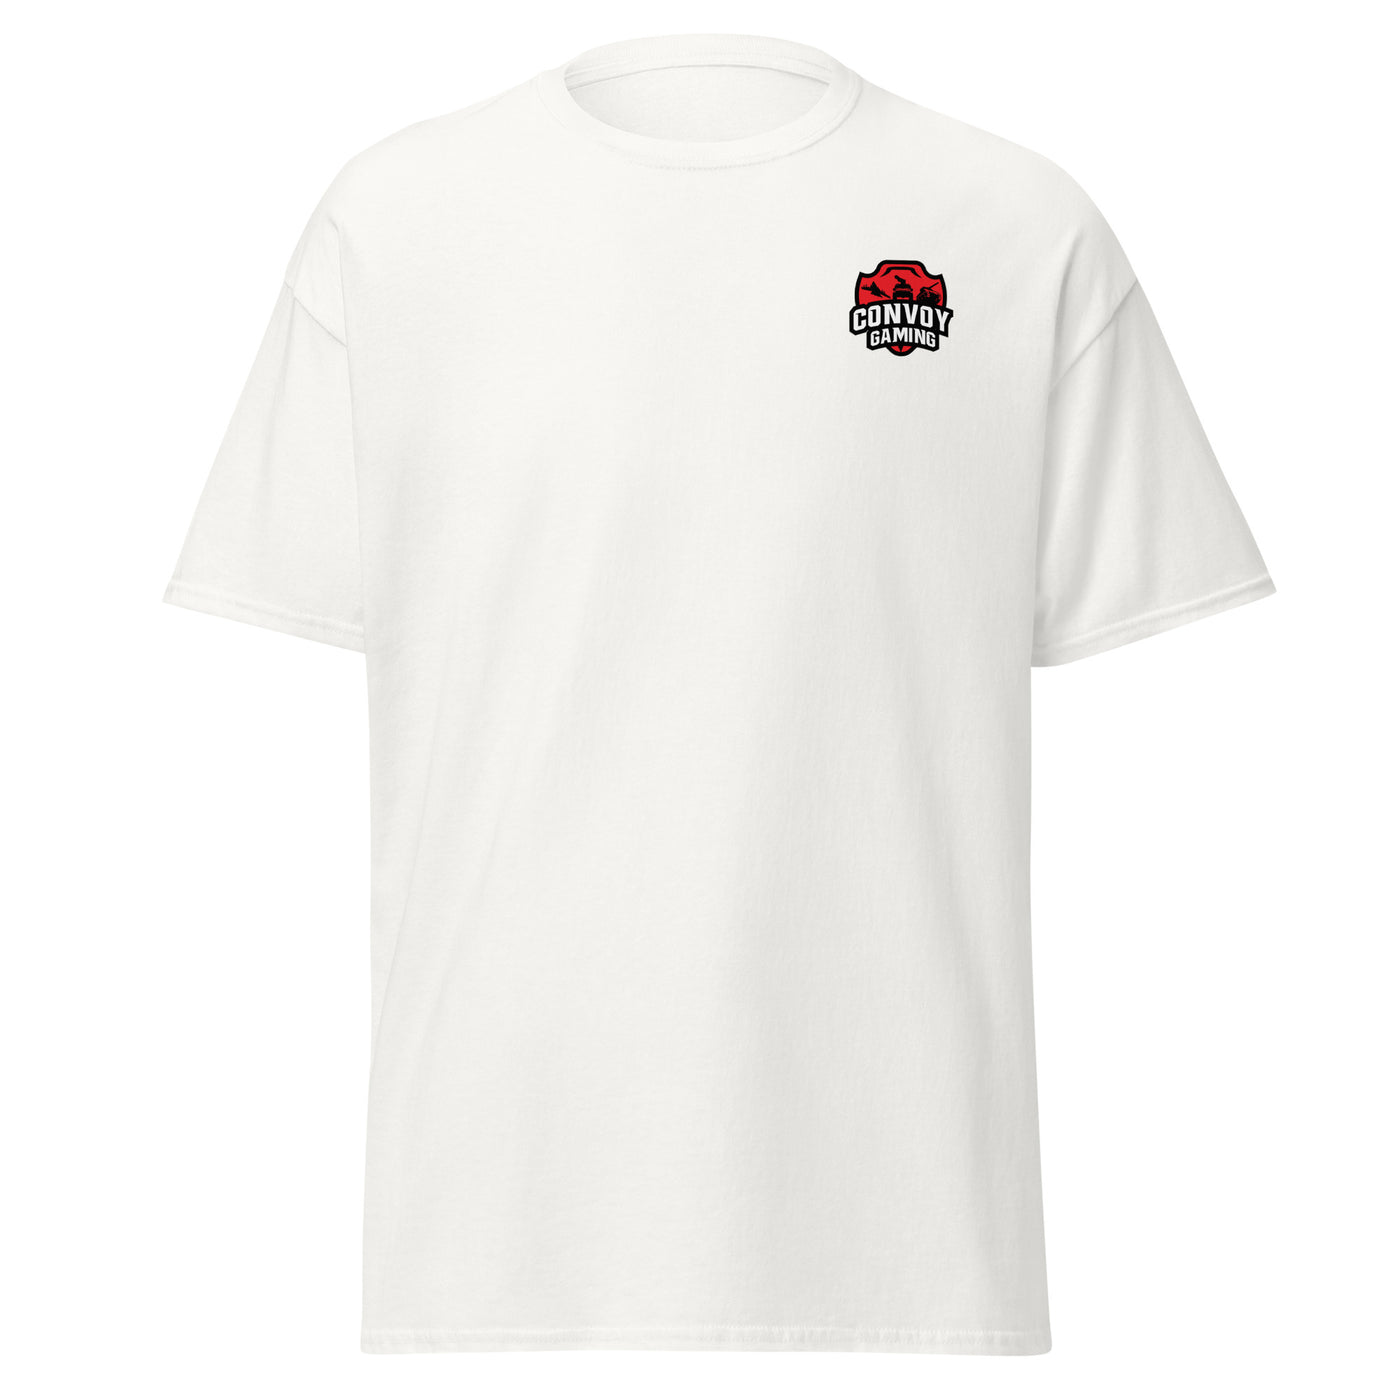 Convoy Gaming Unisex T-Shirt